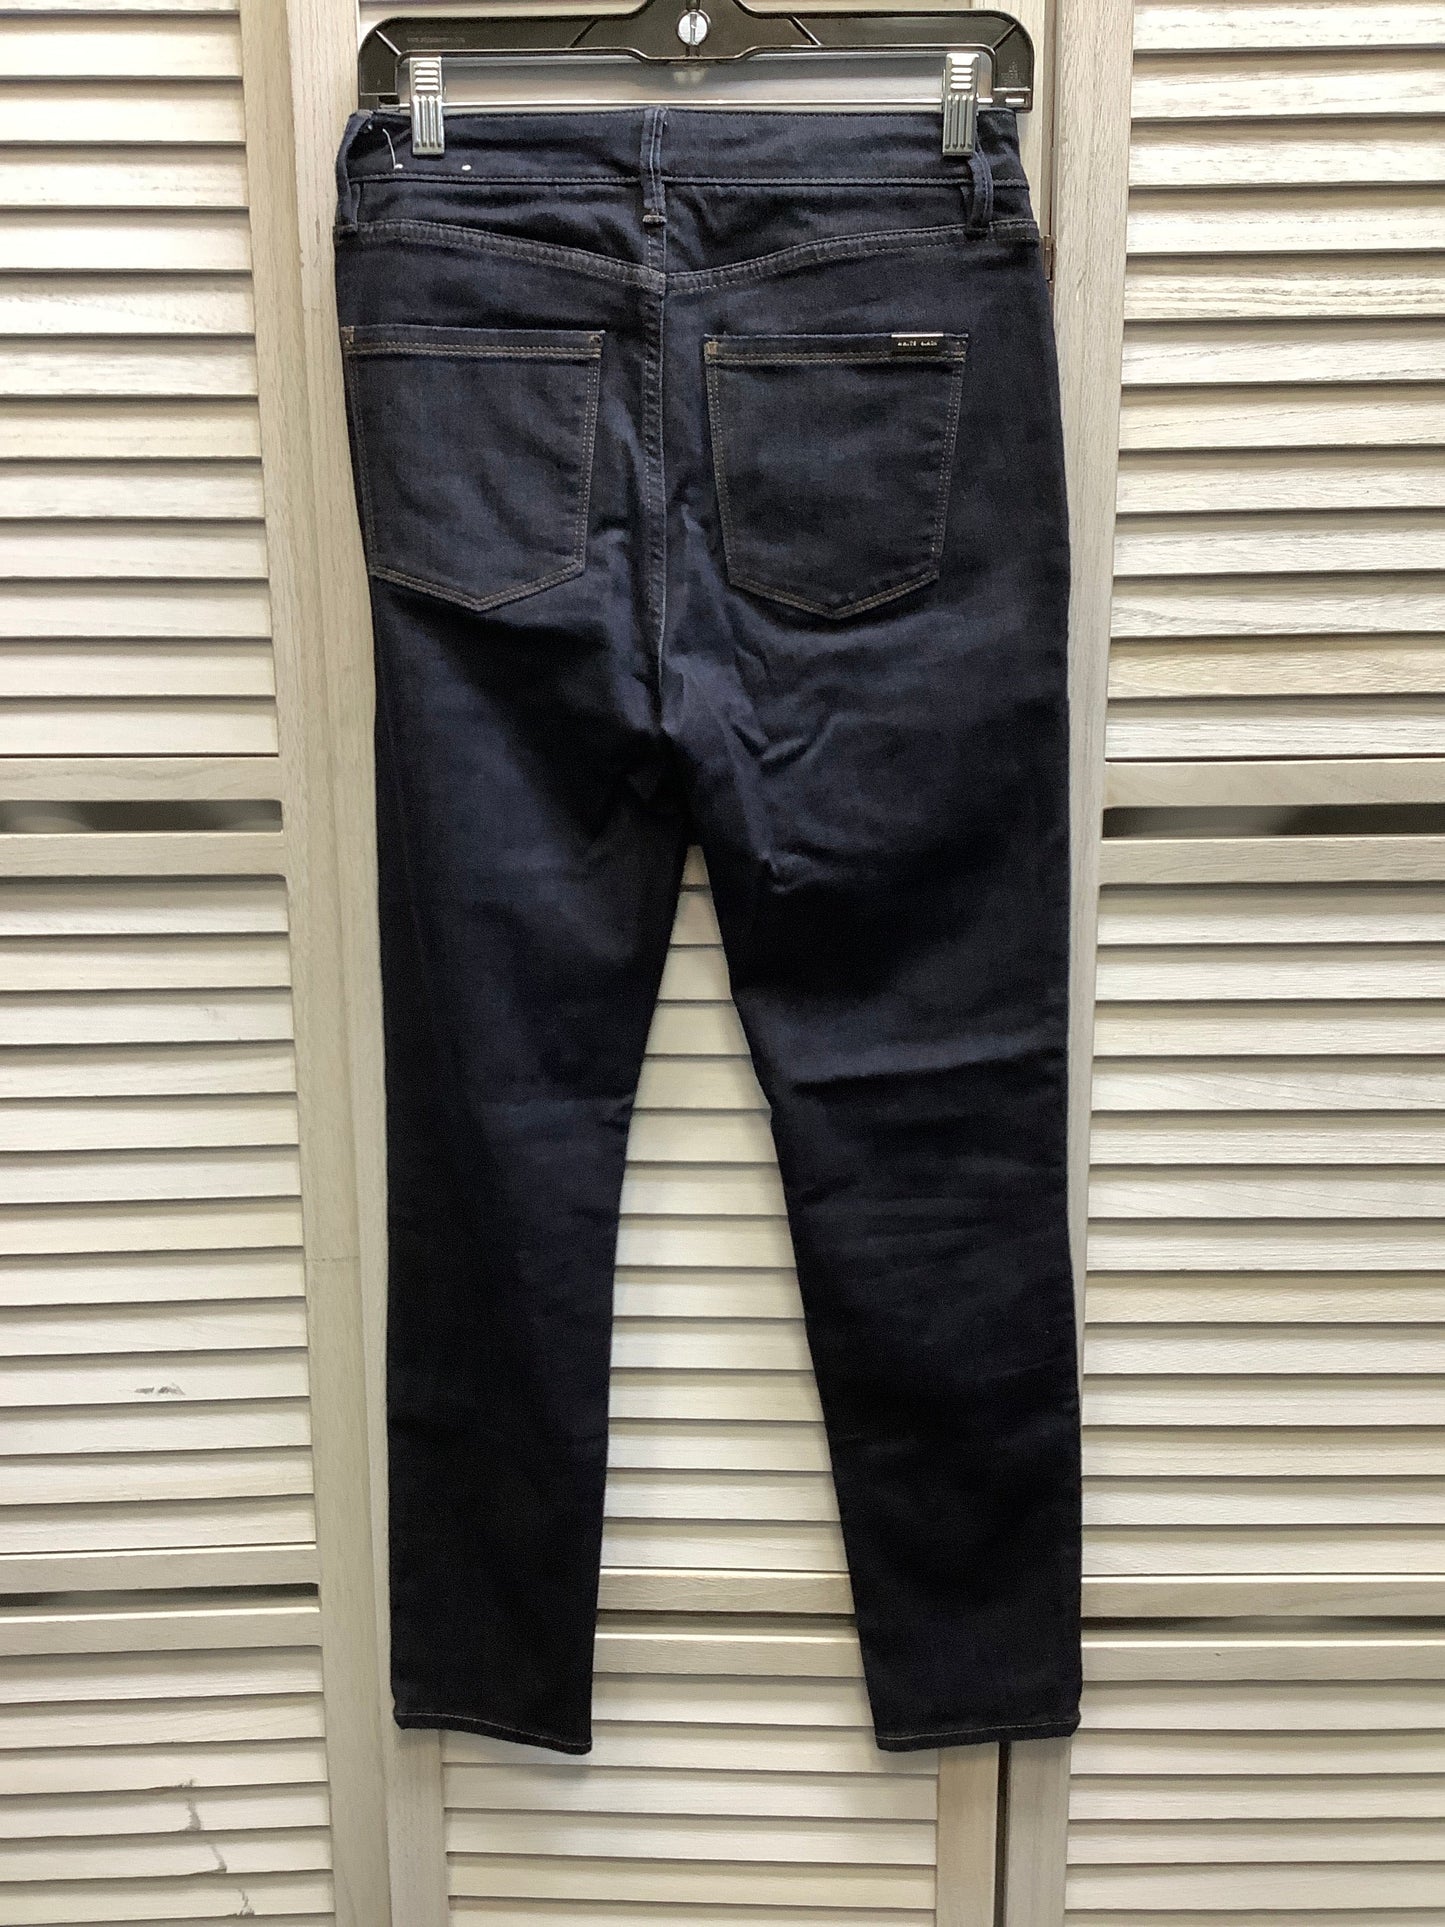 Blue Denim Jeans Skinny White House Black Market, Size 2